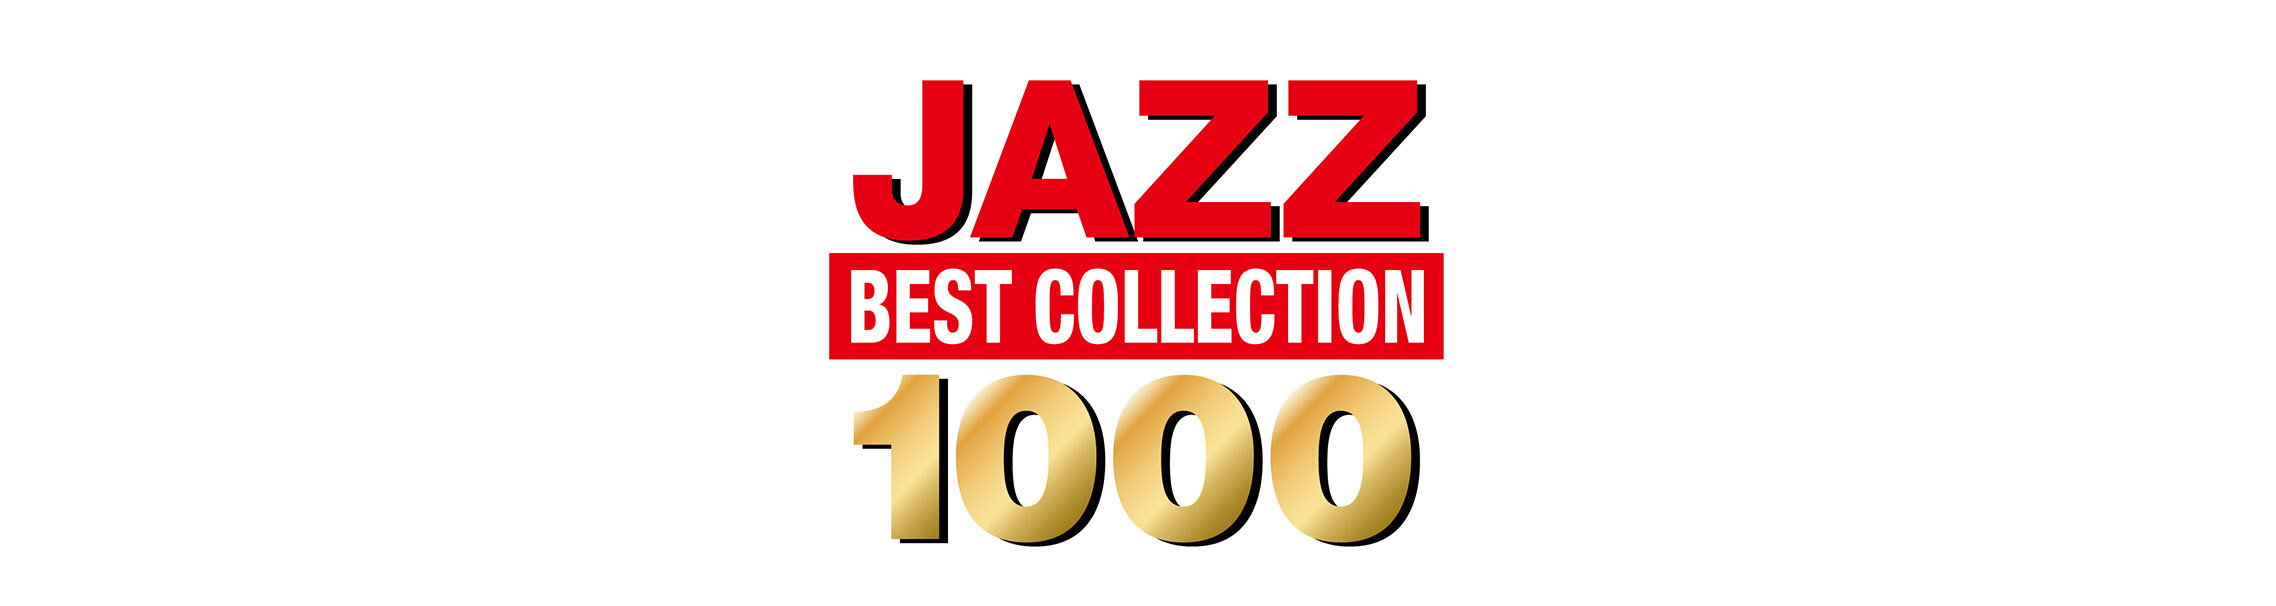 Jazz Best Collection 1000 モア セレクション編 第2弾 14年3月26日発売 Warner Music Japan